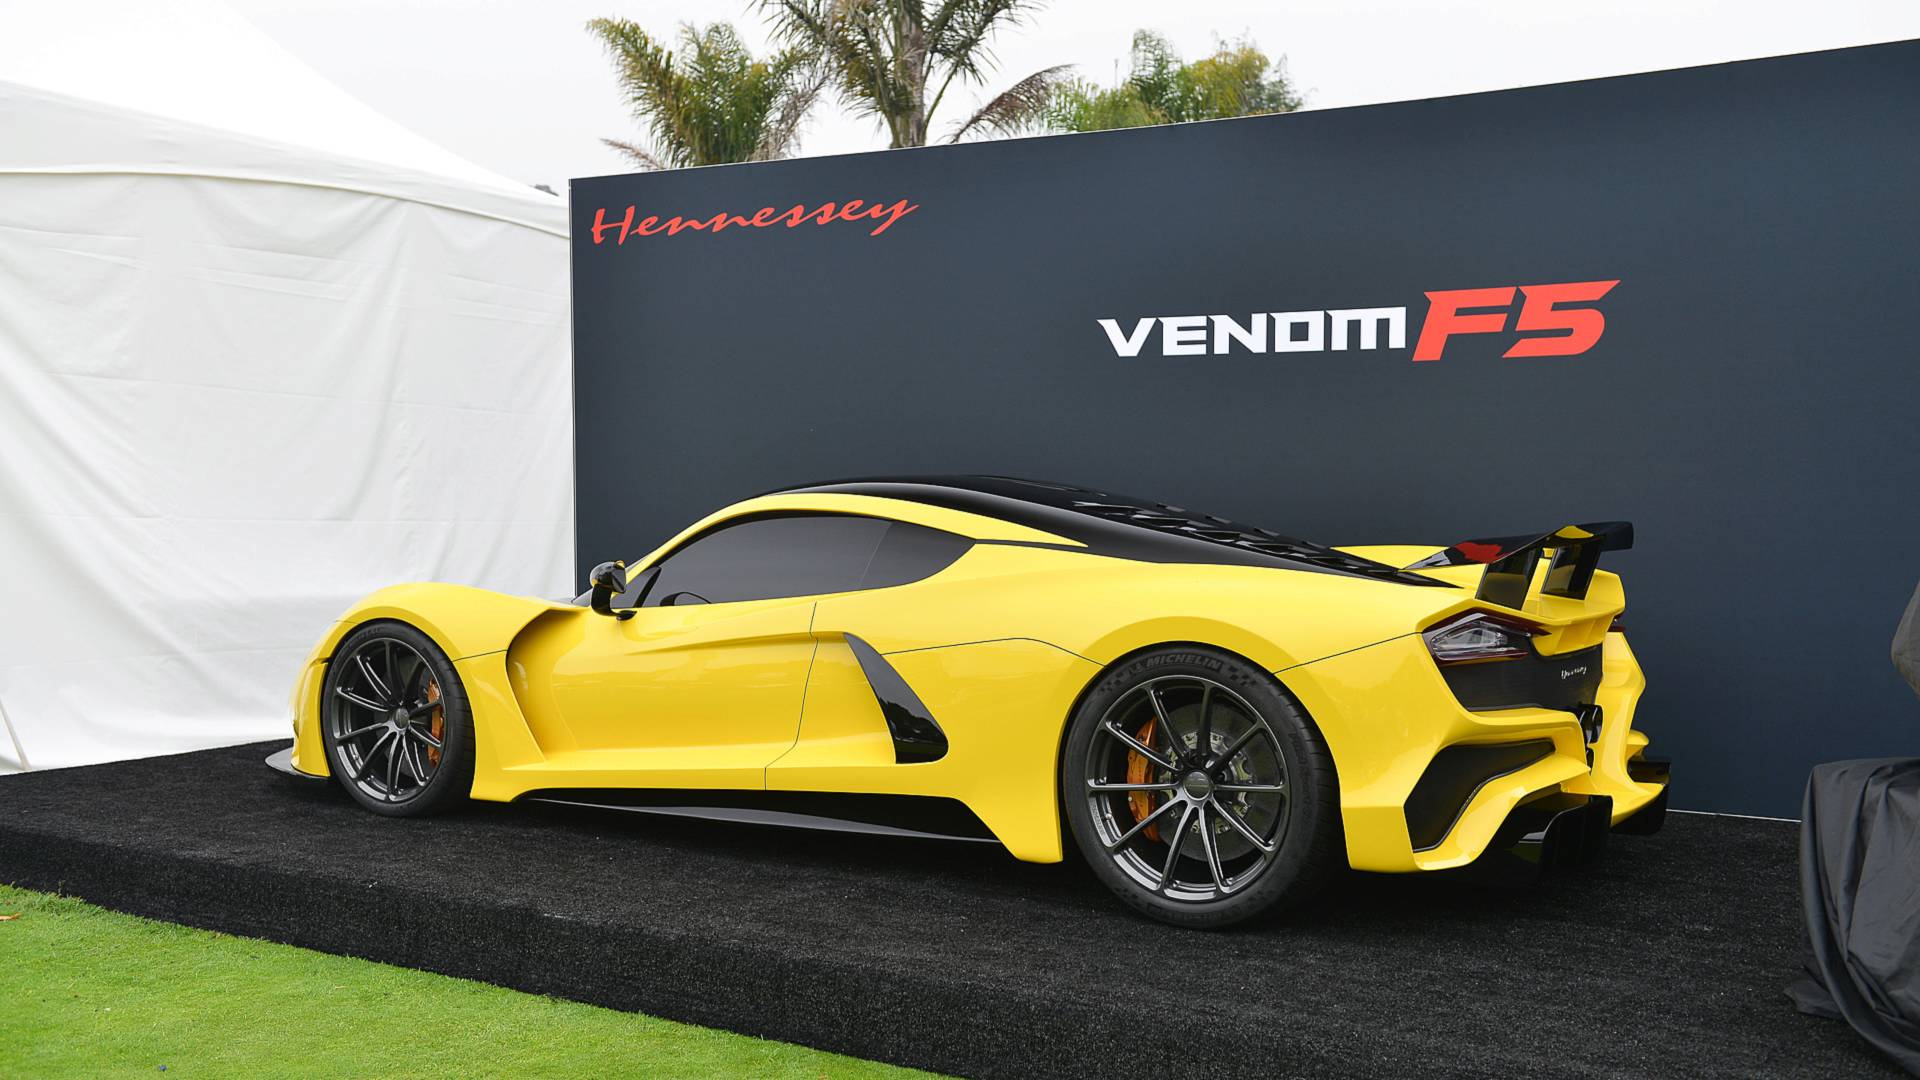 Hennessey Venom F5 Logo - Hennessey Venom F5 Targets 311 MPH Top Speed